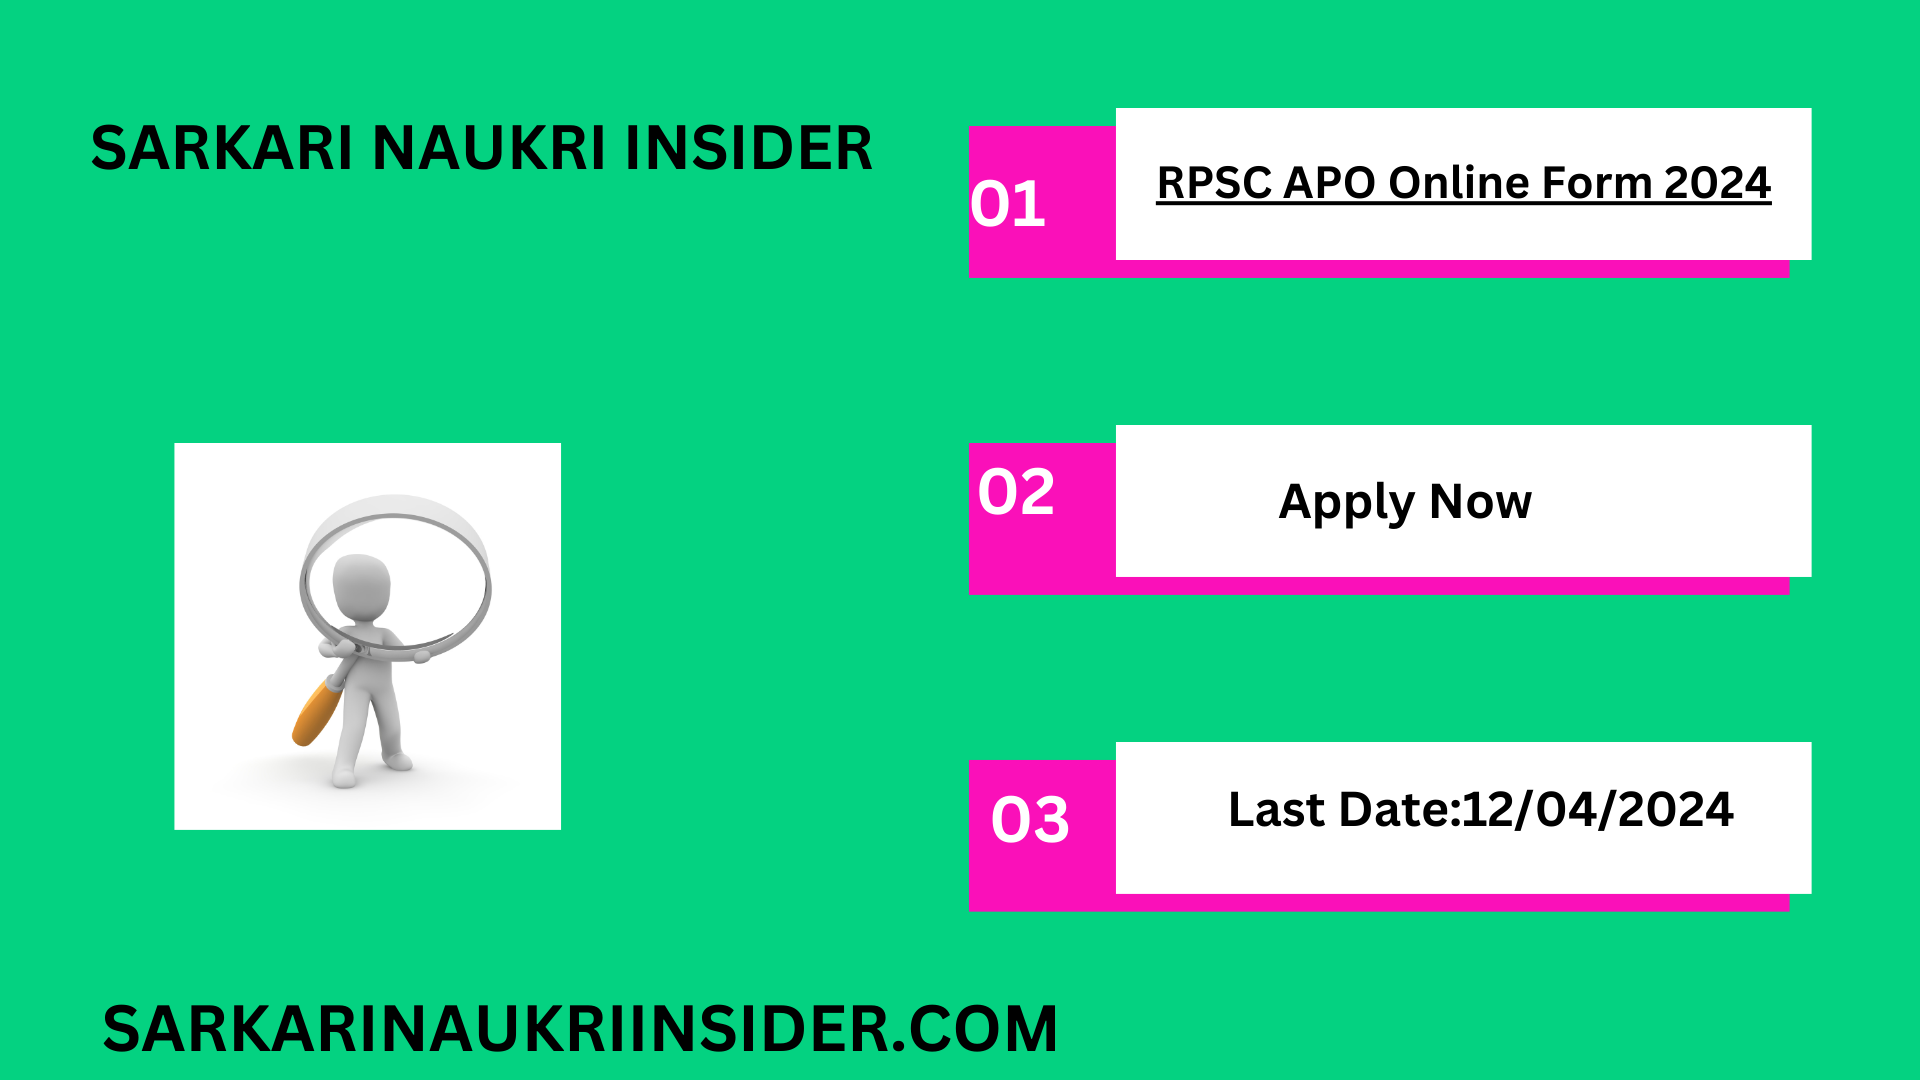 RPSC APO Online Form 2024